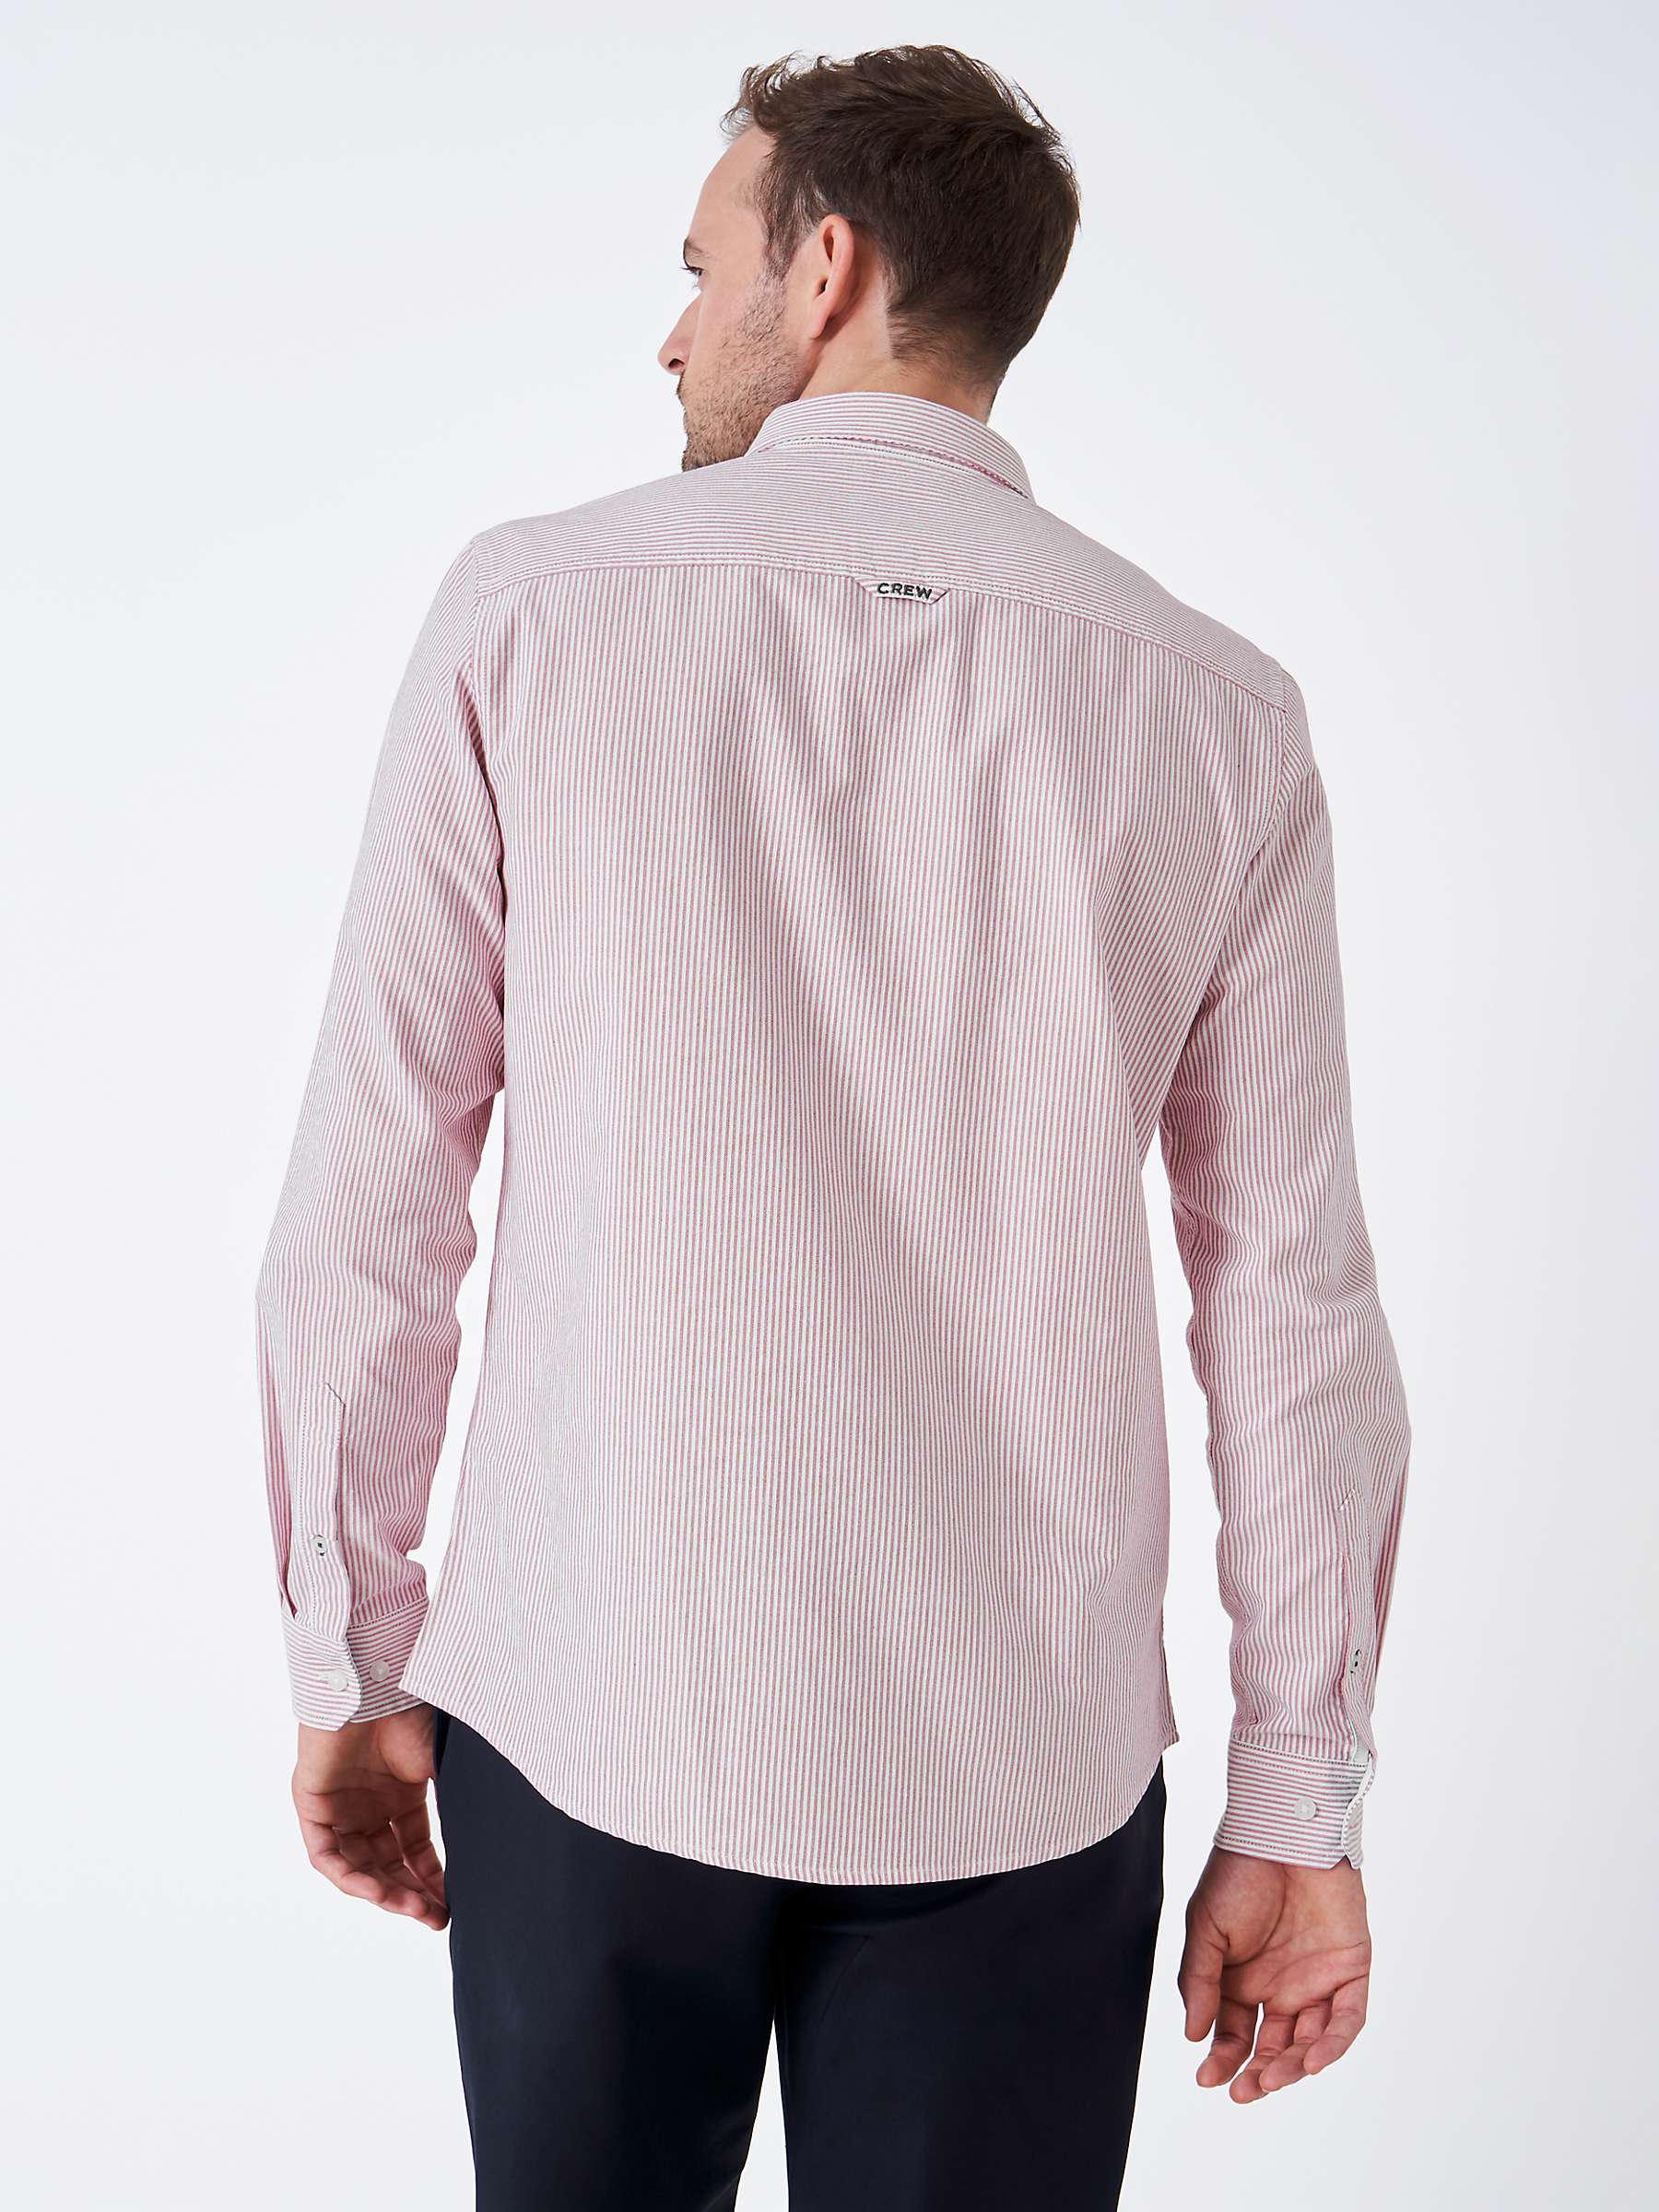 Buy Crew Clothing Oxford Stripe Shirt Online at johnlewis.com